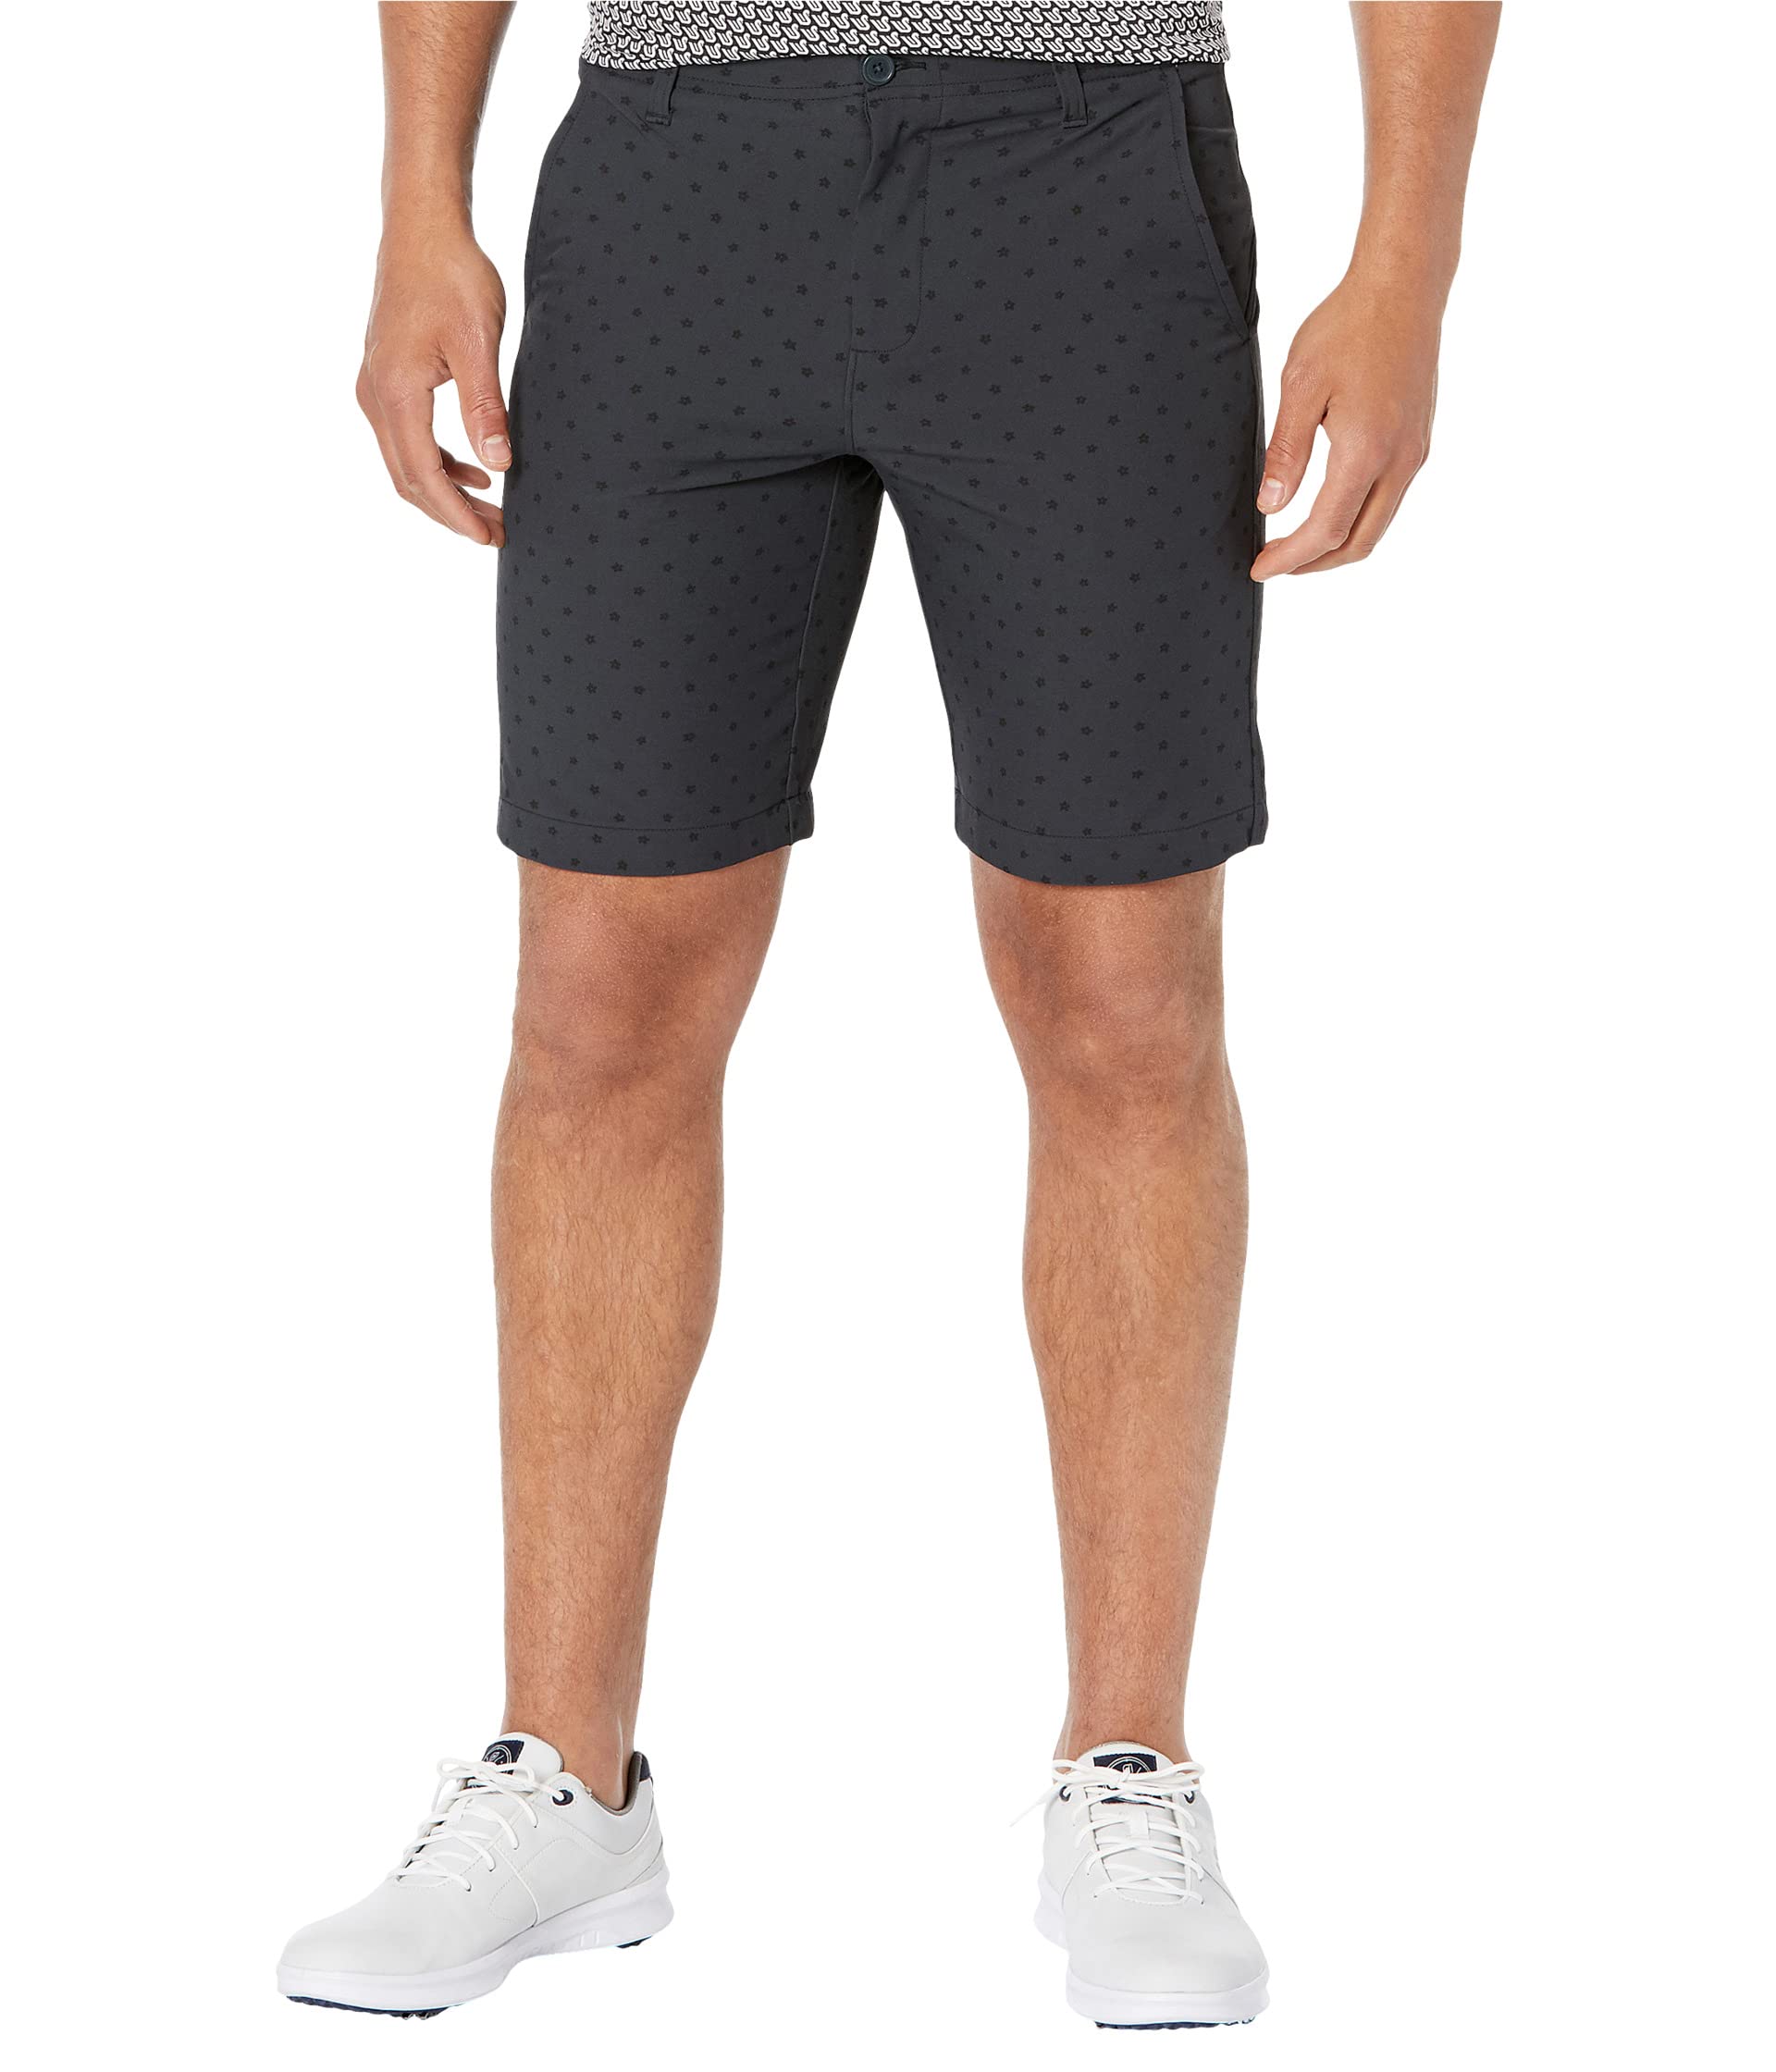 Шорты Under Armour Golf, Drive Printed Shorts брюки для вождения under armour golf цвет black halo gray